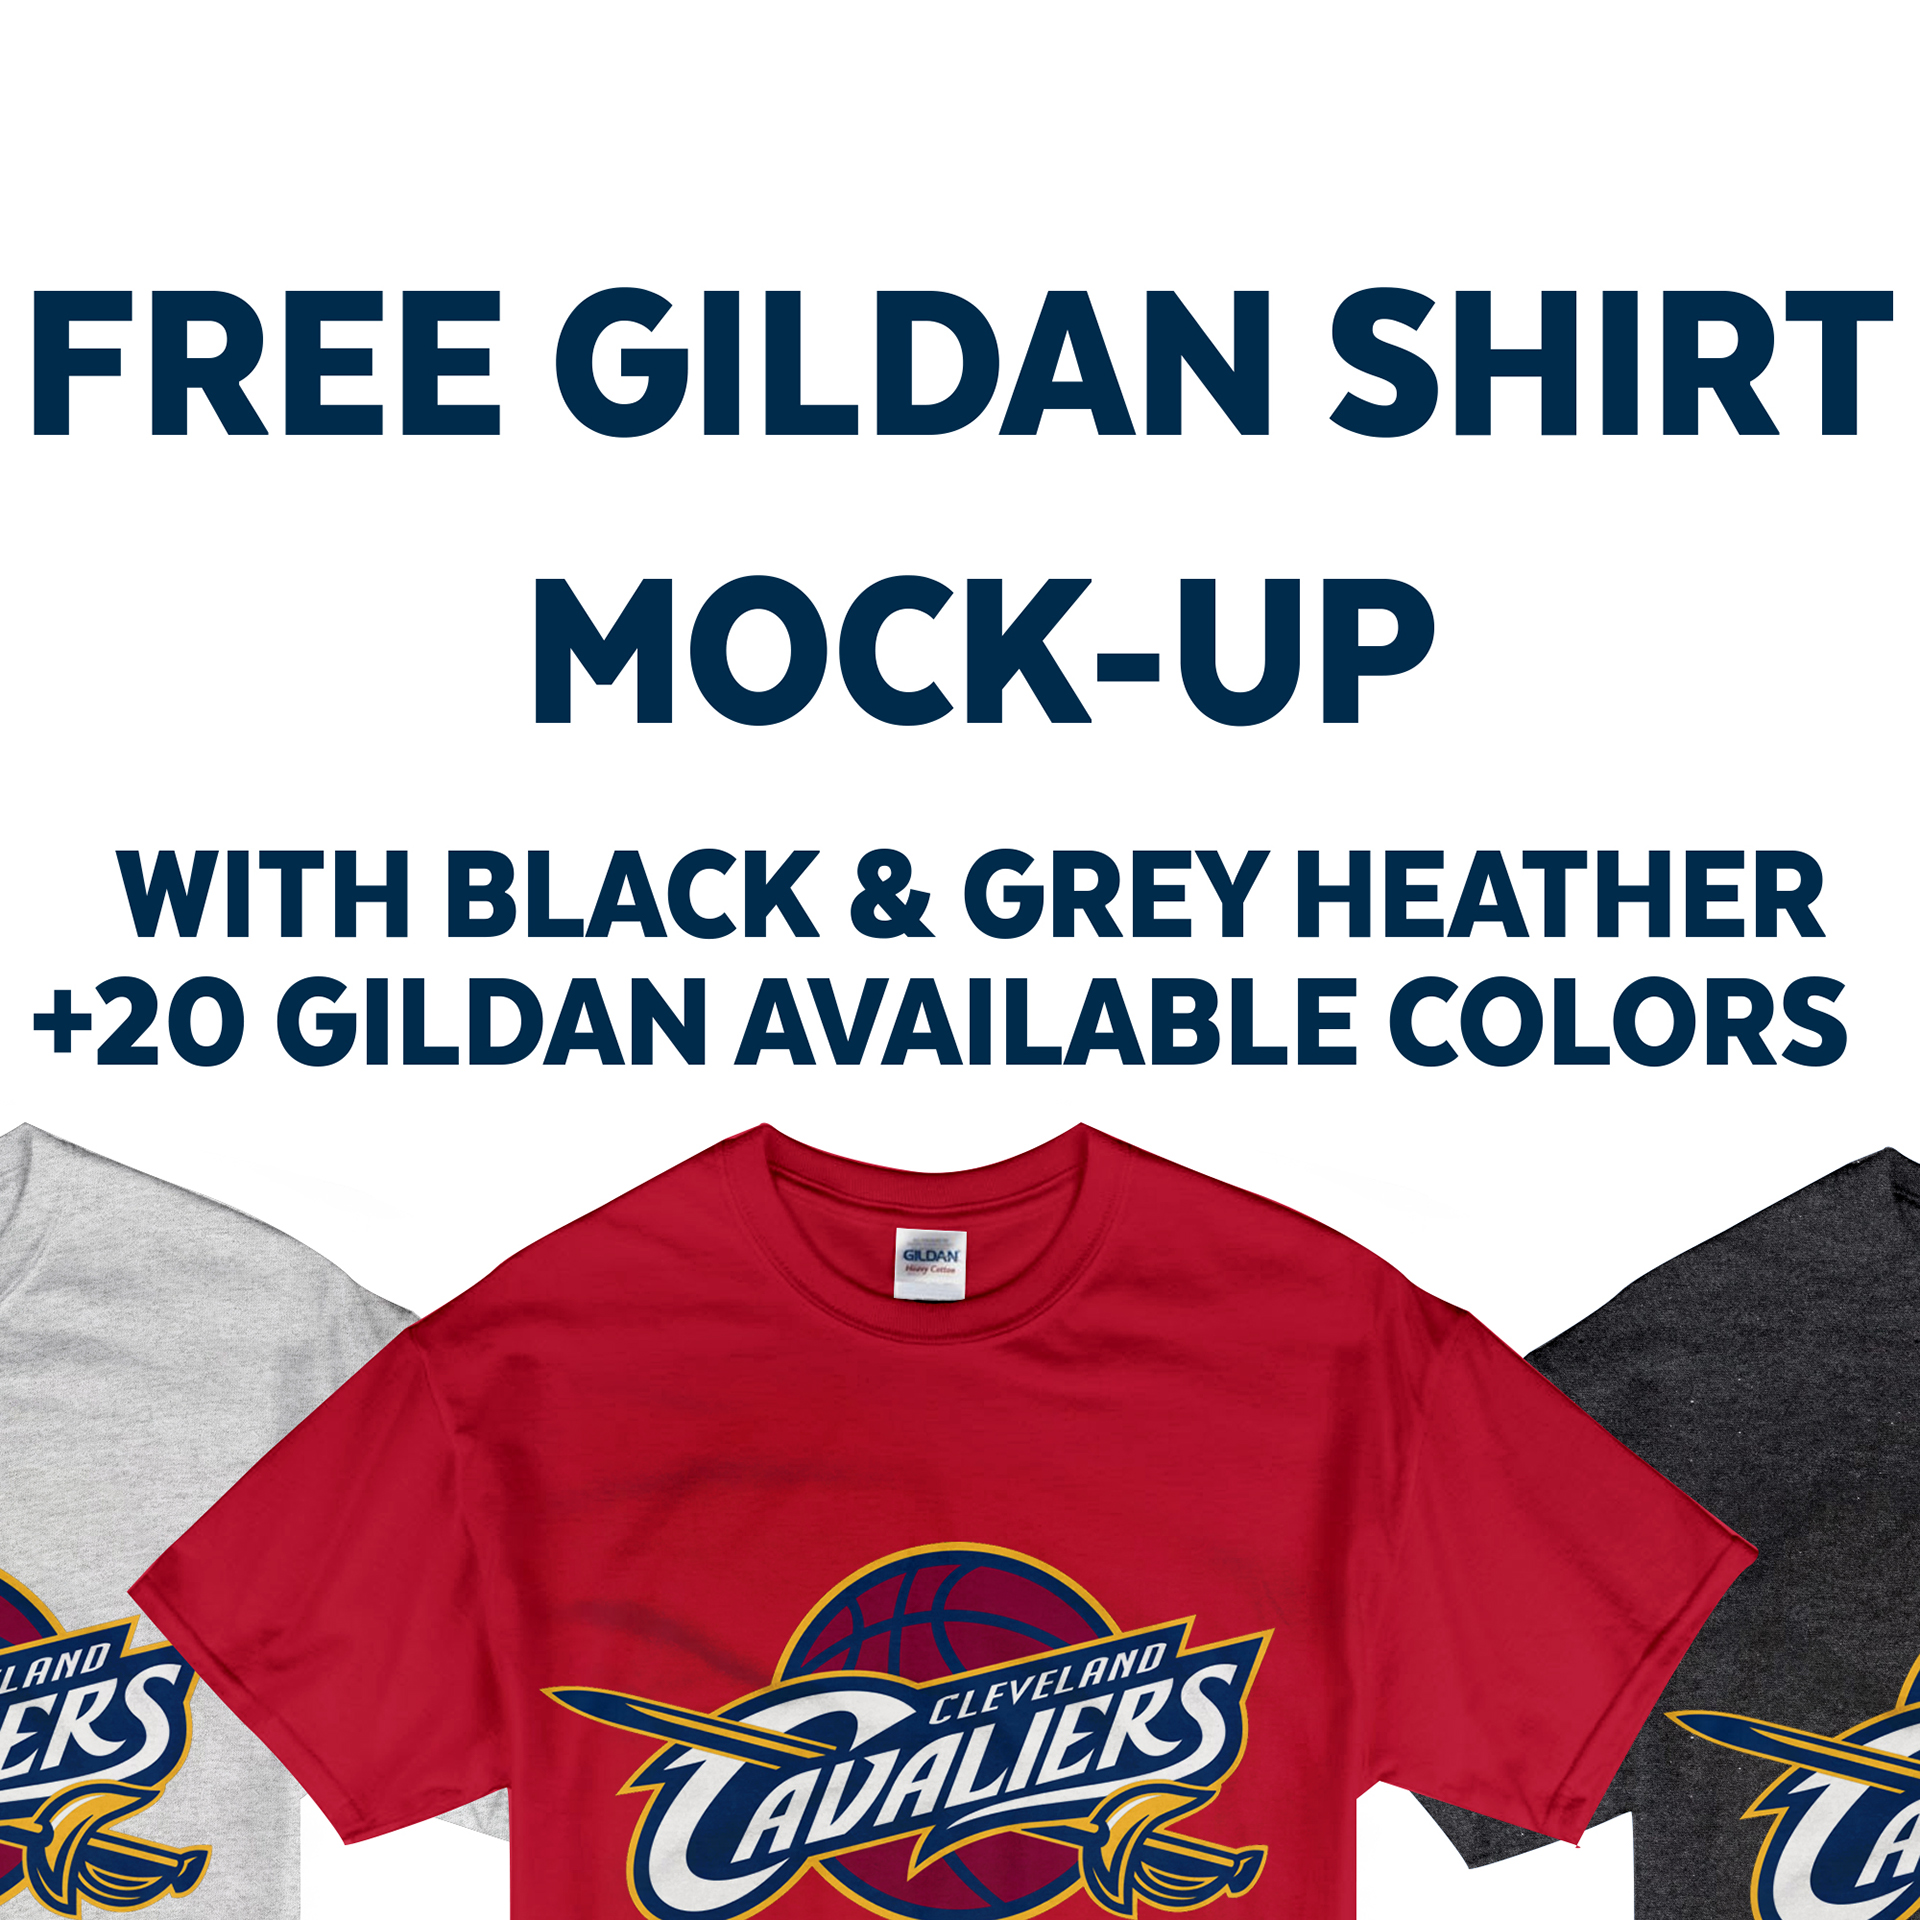 Download Free Gildan T Shirt Mock Up 1 By Wardo On Behance PSD Mockup Templates